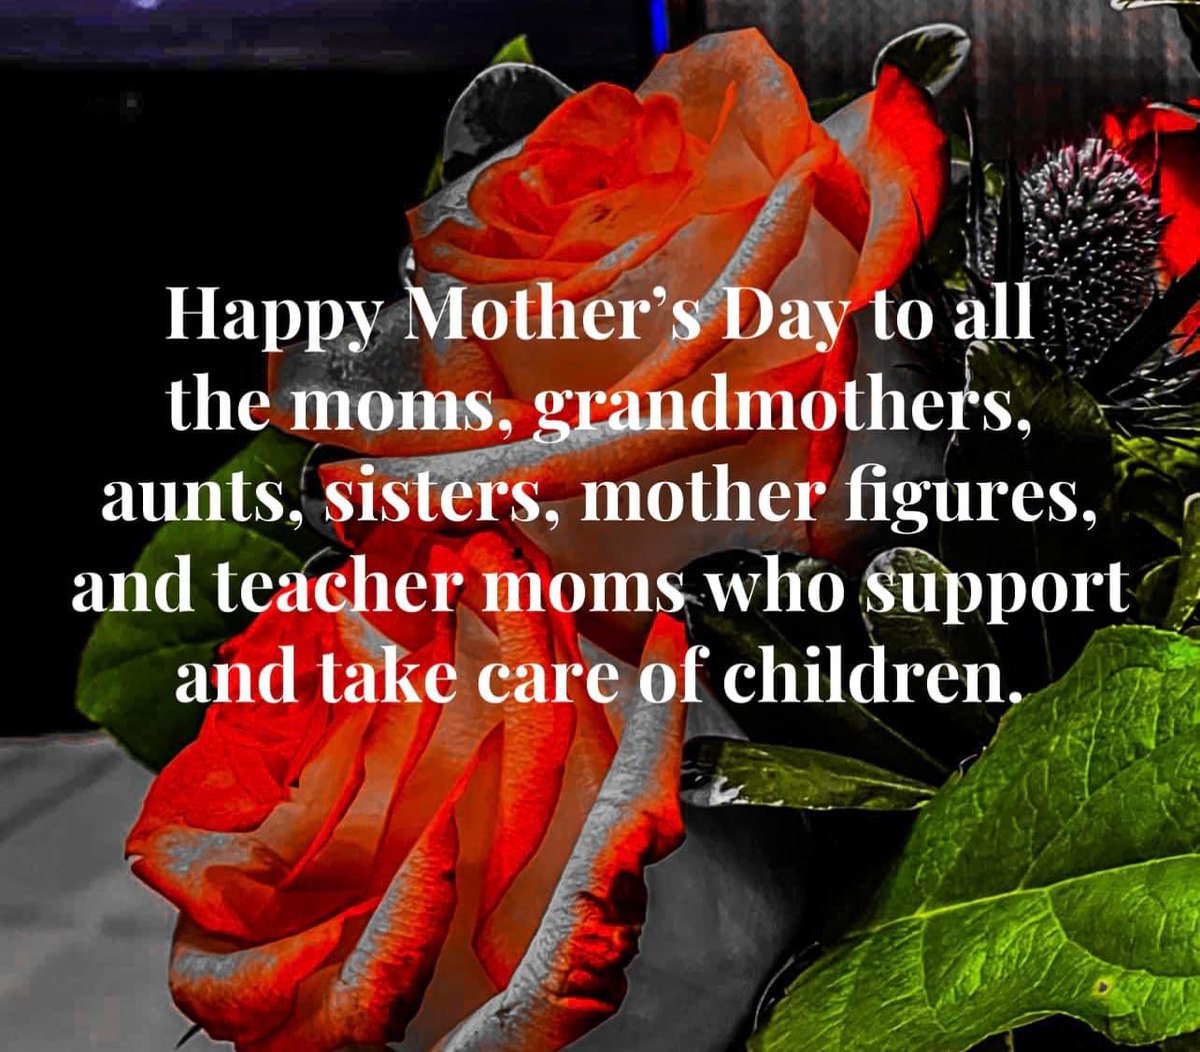 #mothersday #happymothersday